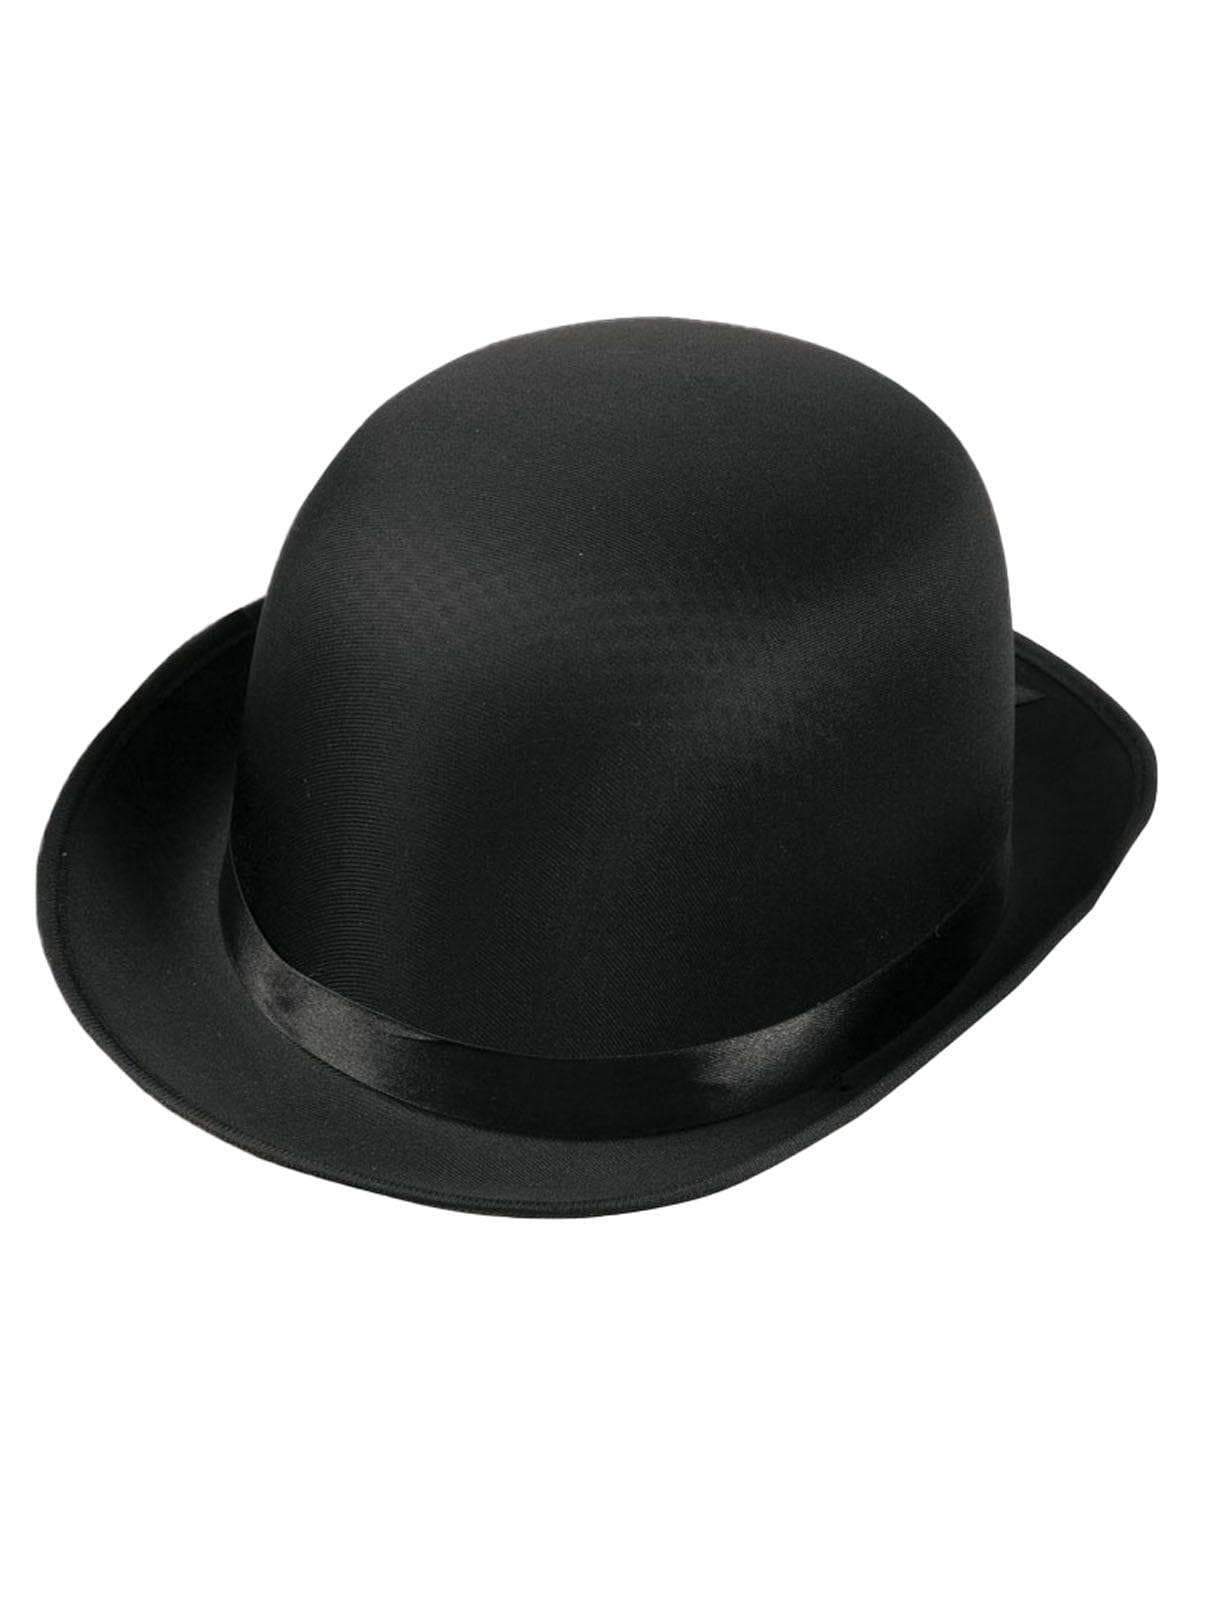 Adult Black Satin Derby Hat - costumes.com